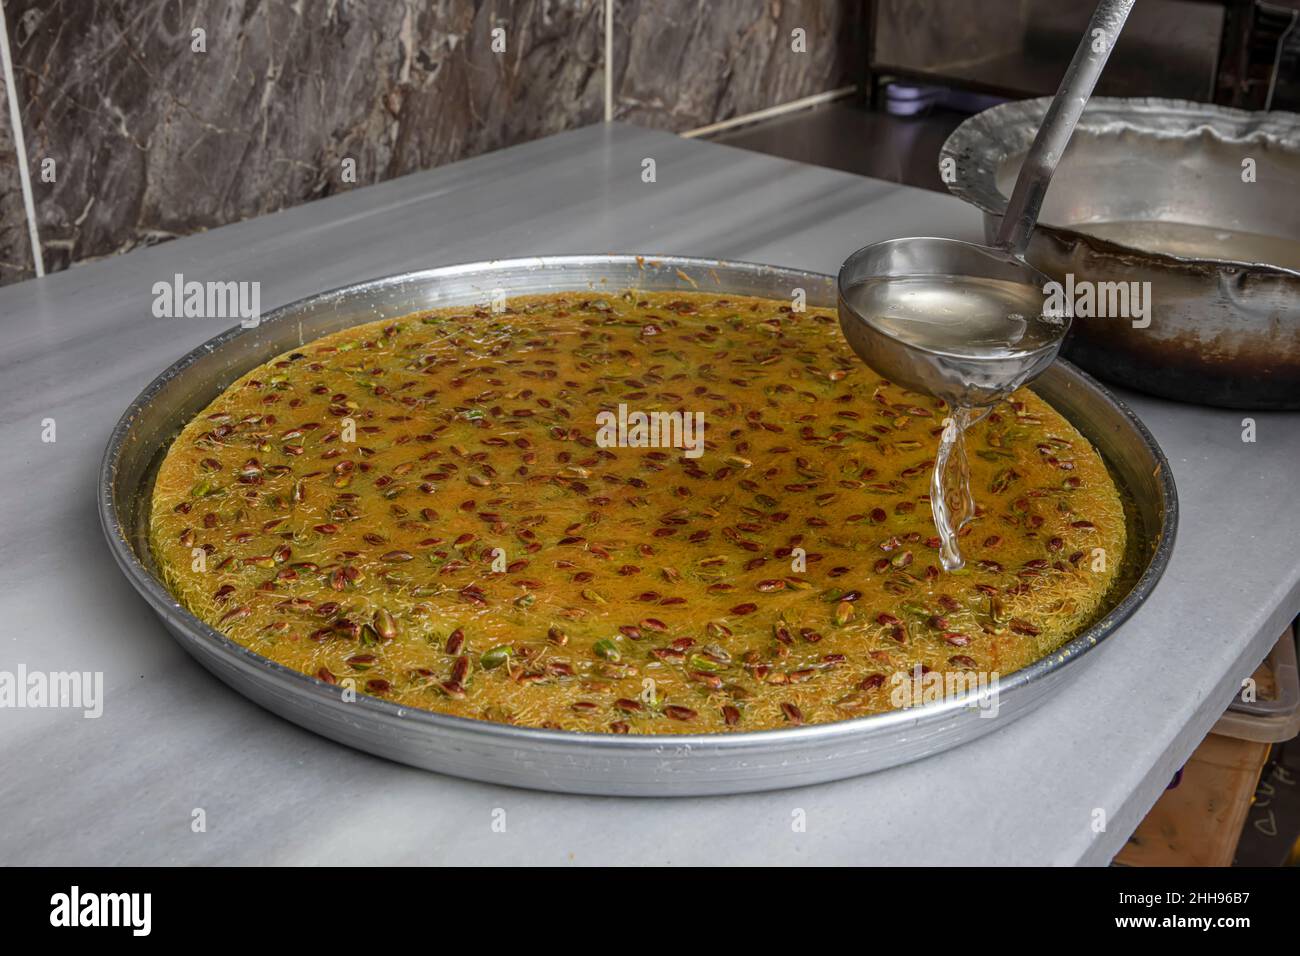 Dessert Kadayif con pistacchio su un vassoio nel laboratorio kadaif, lo chef versa sherbet sul vassoio kadaif appena fatto. Cucina turca kadayif desser Foto Stock